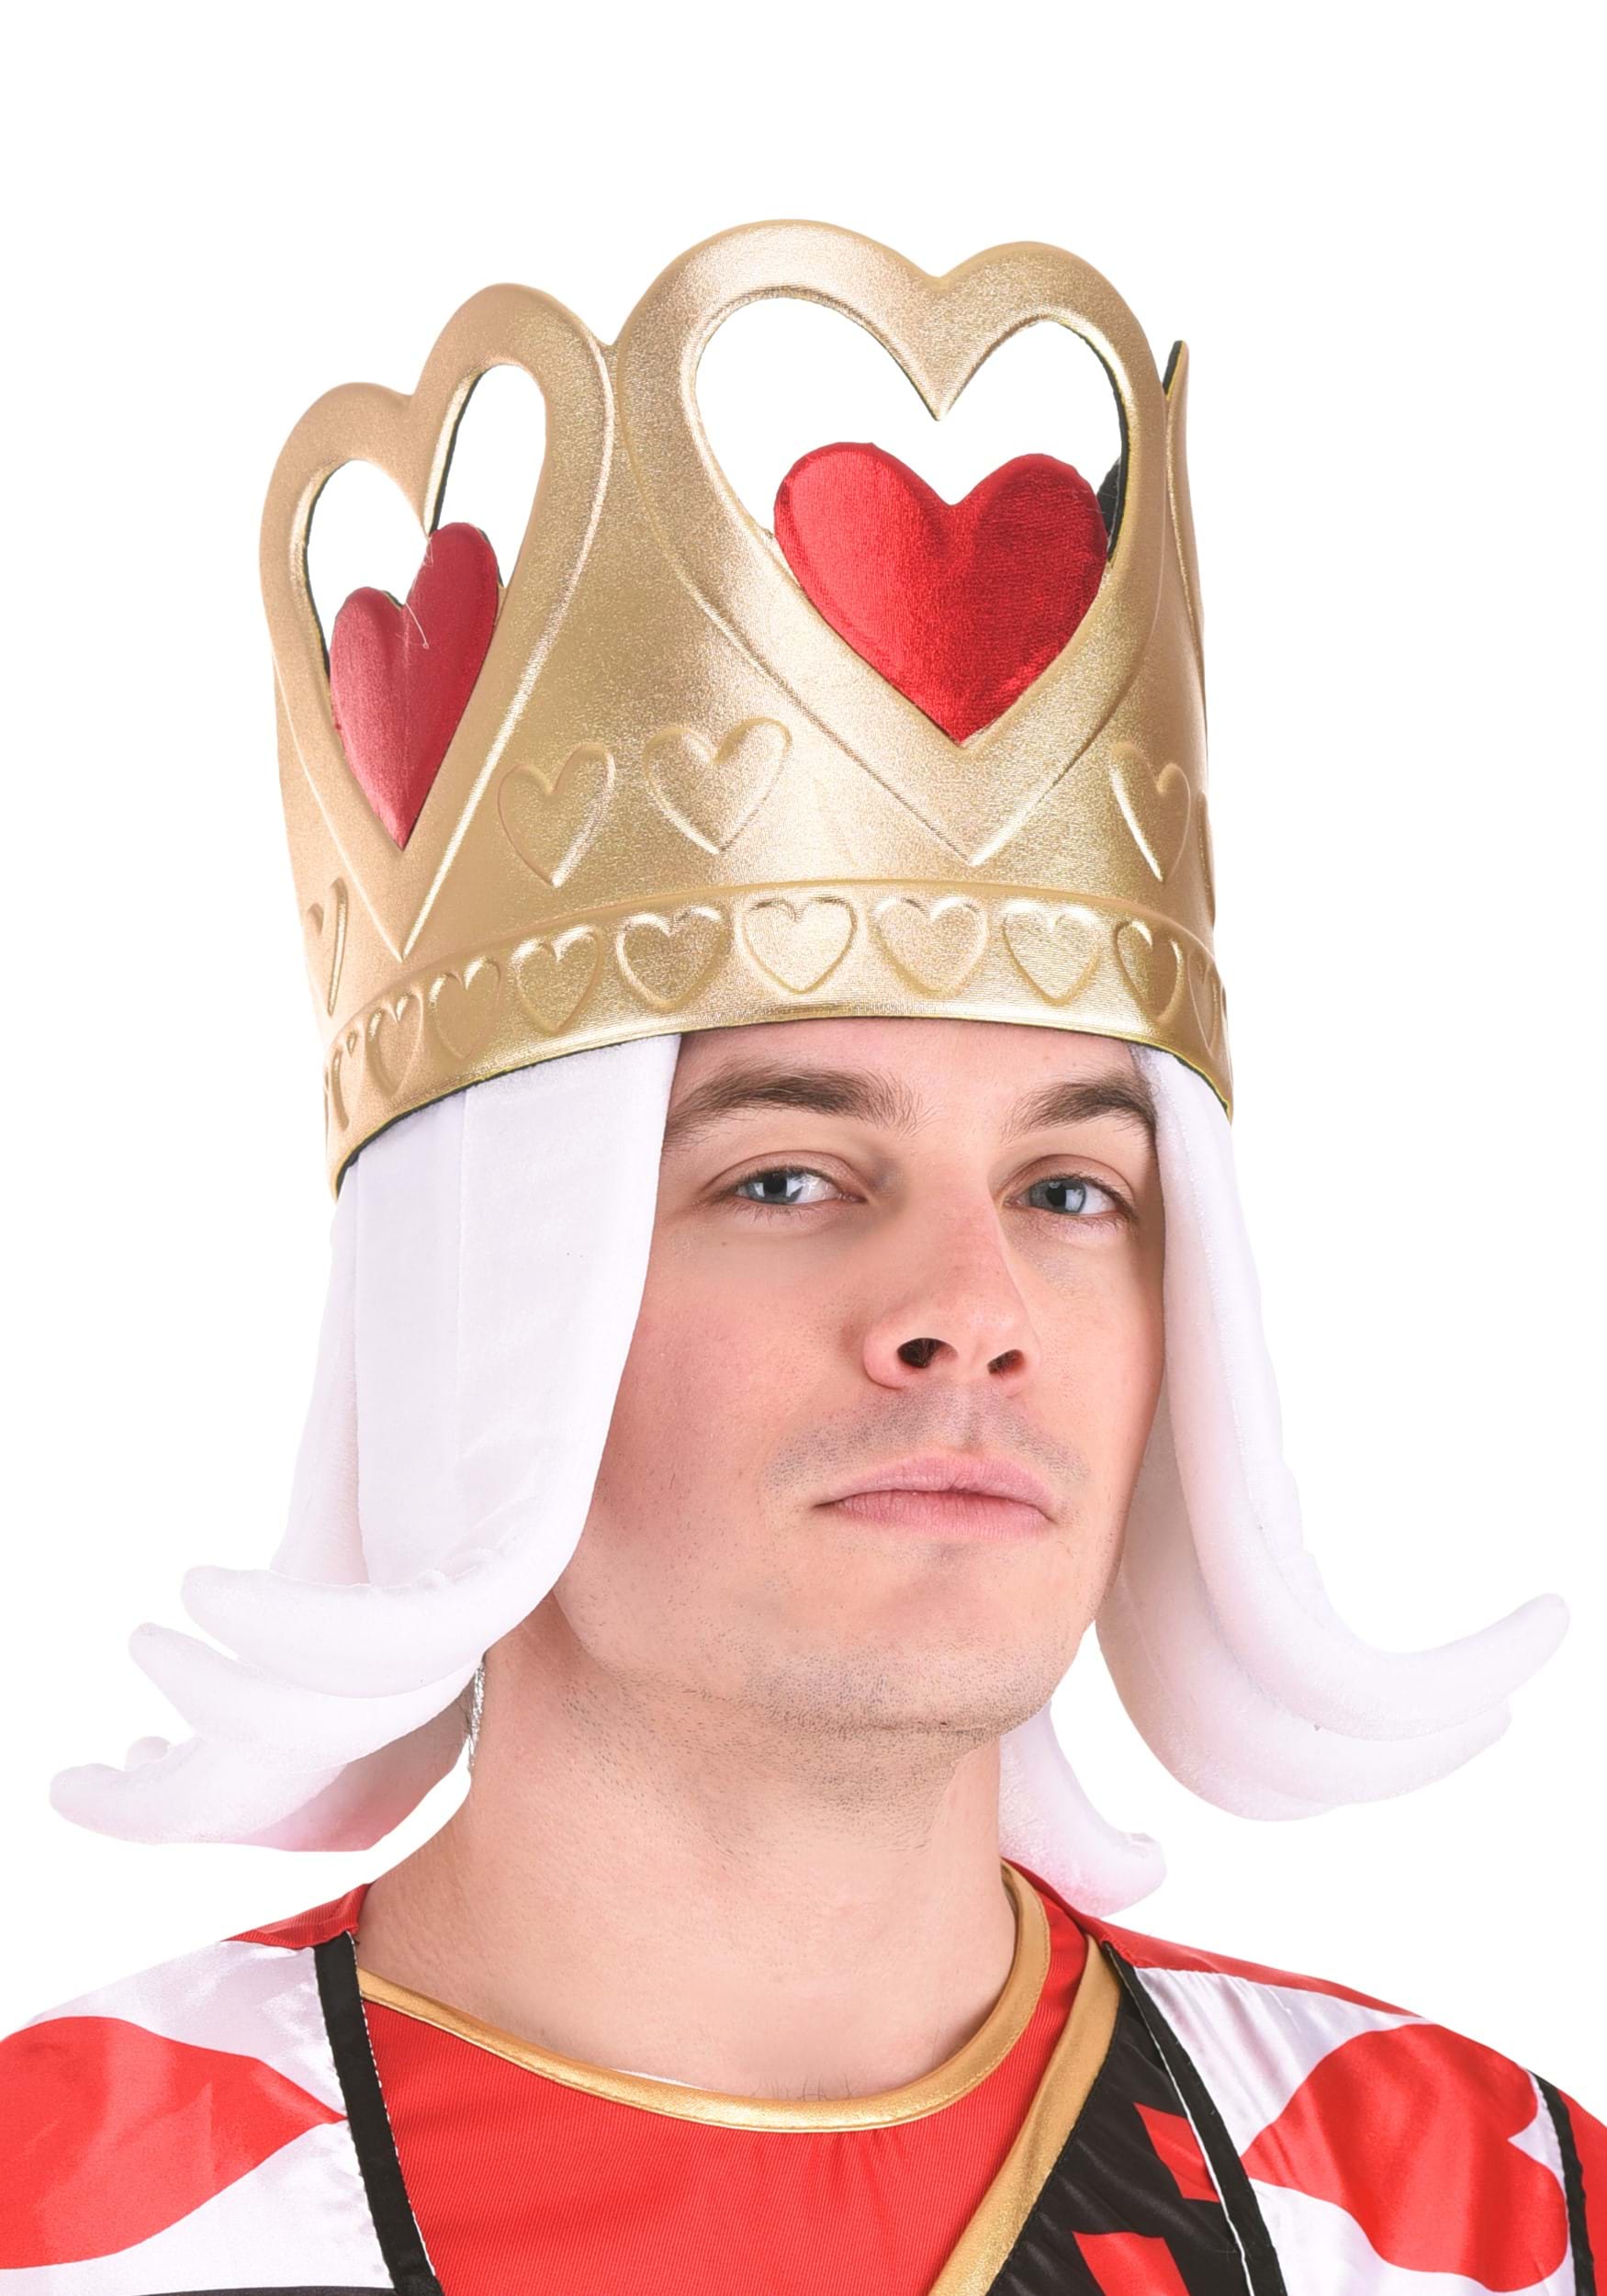 Queen of Hearts Crown, Queen of Heart Costume, Red Heart Gold